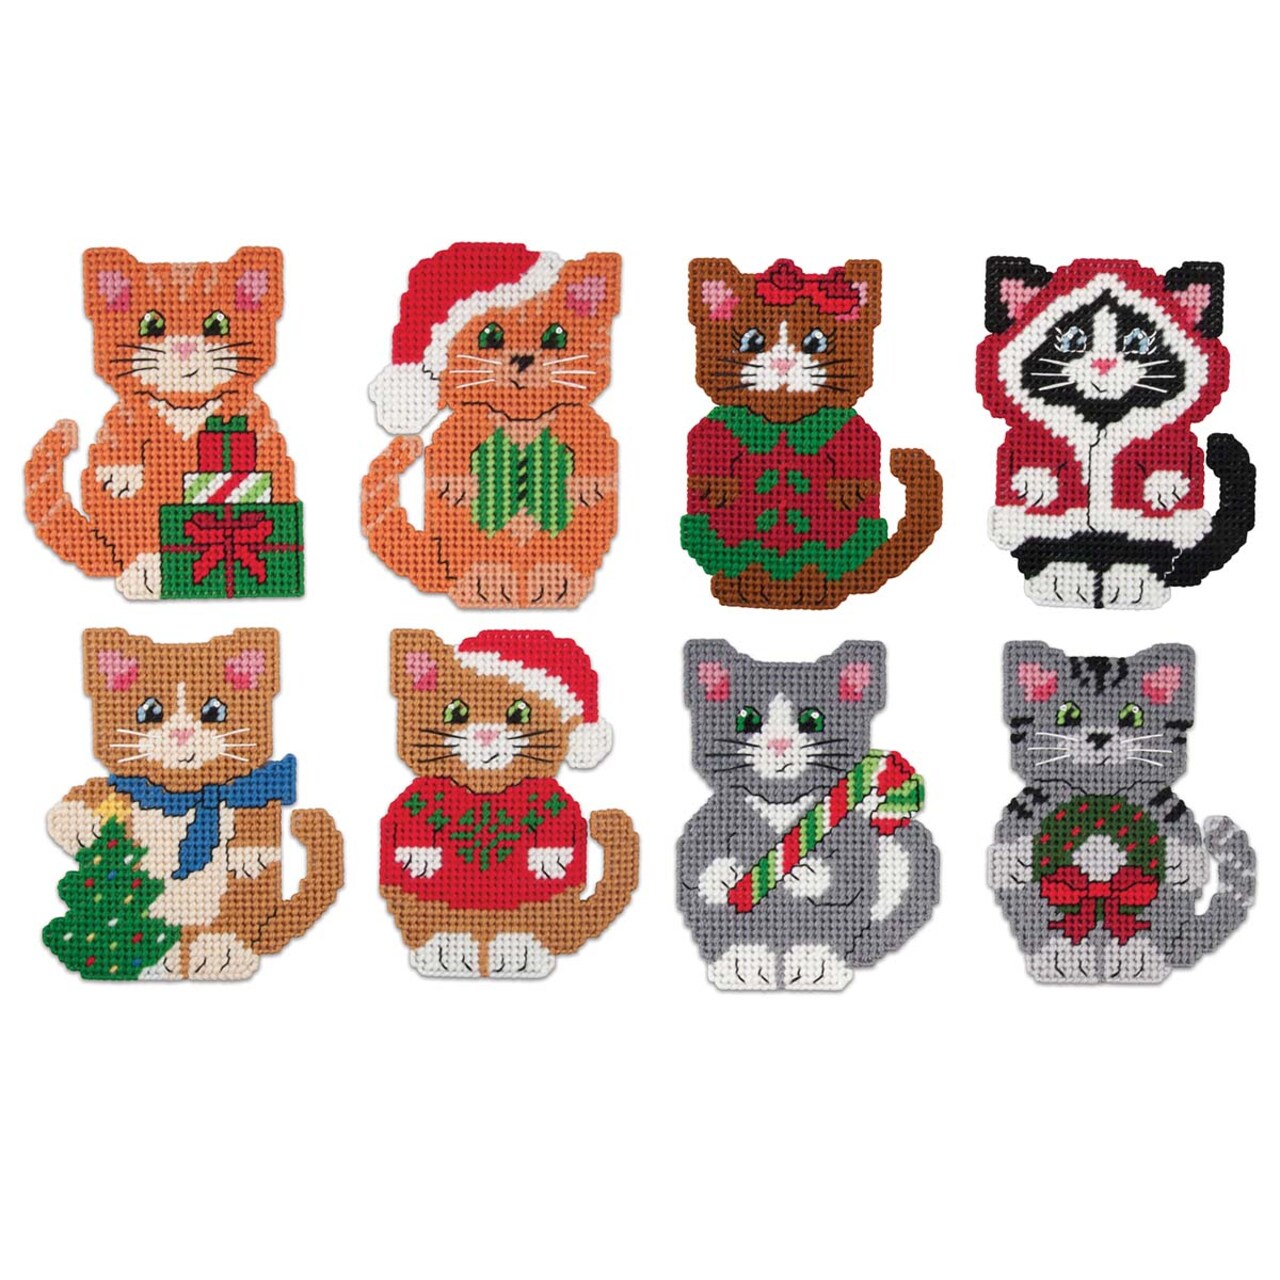 Herrschners Christmas Kittens Ornaments Plastic Canvas Kit